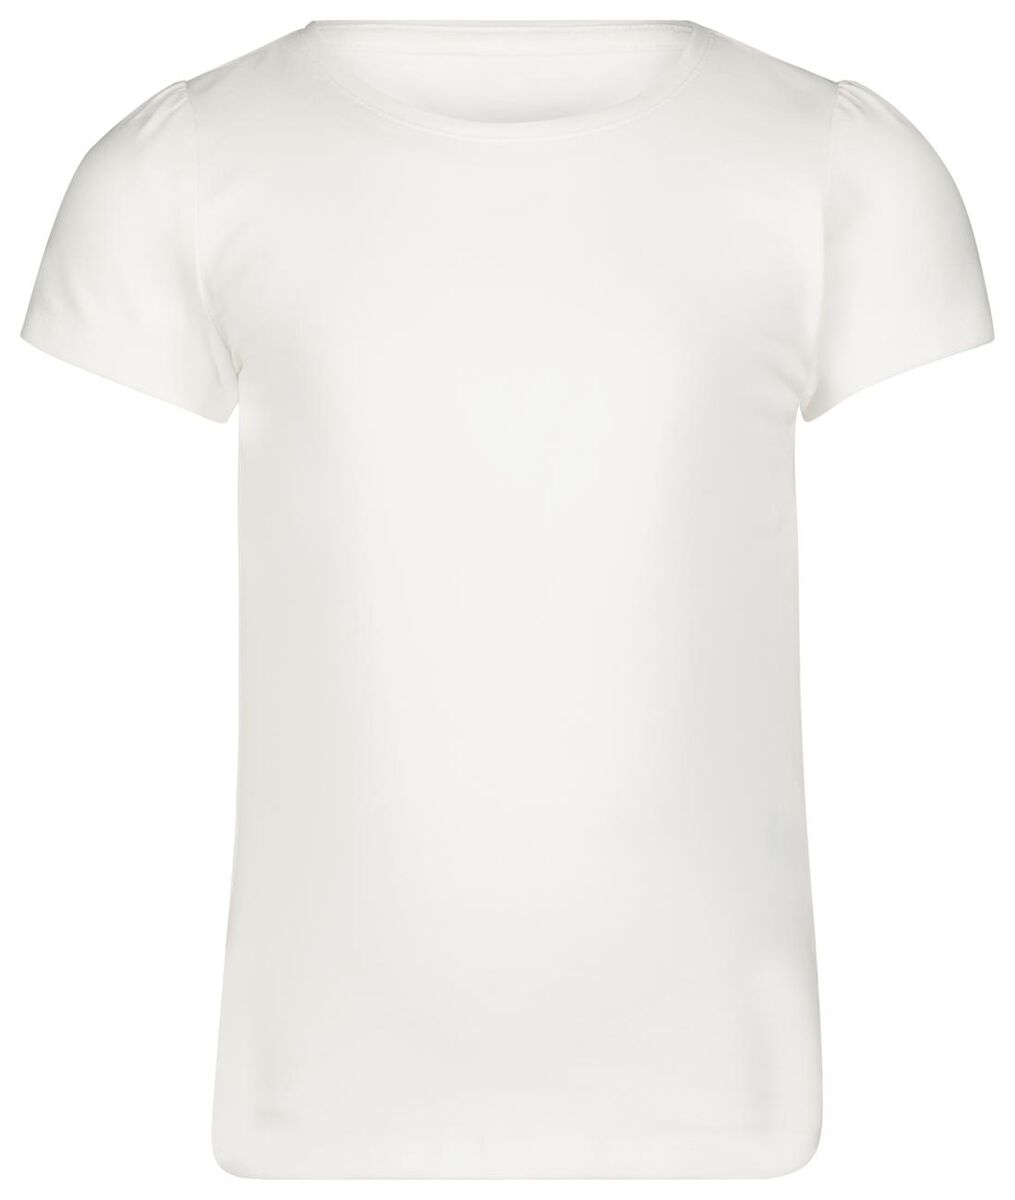 kinder t-shirts - 2 stuks wit 86/92 - 30843930 - HEMA